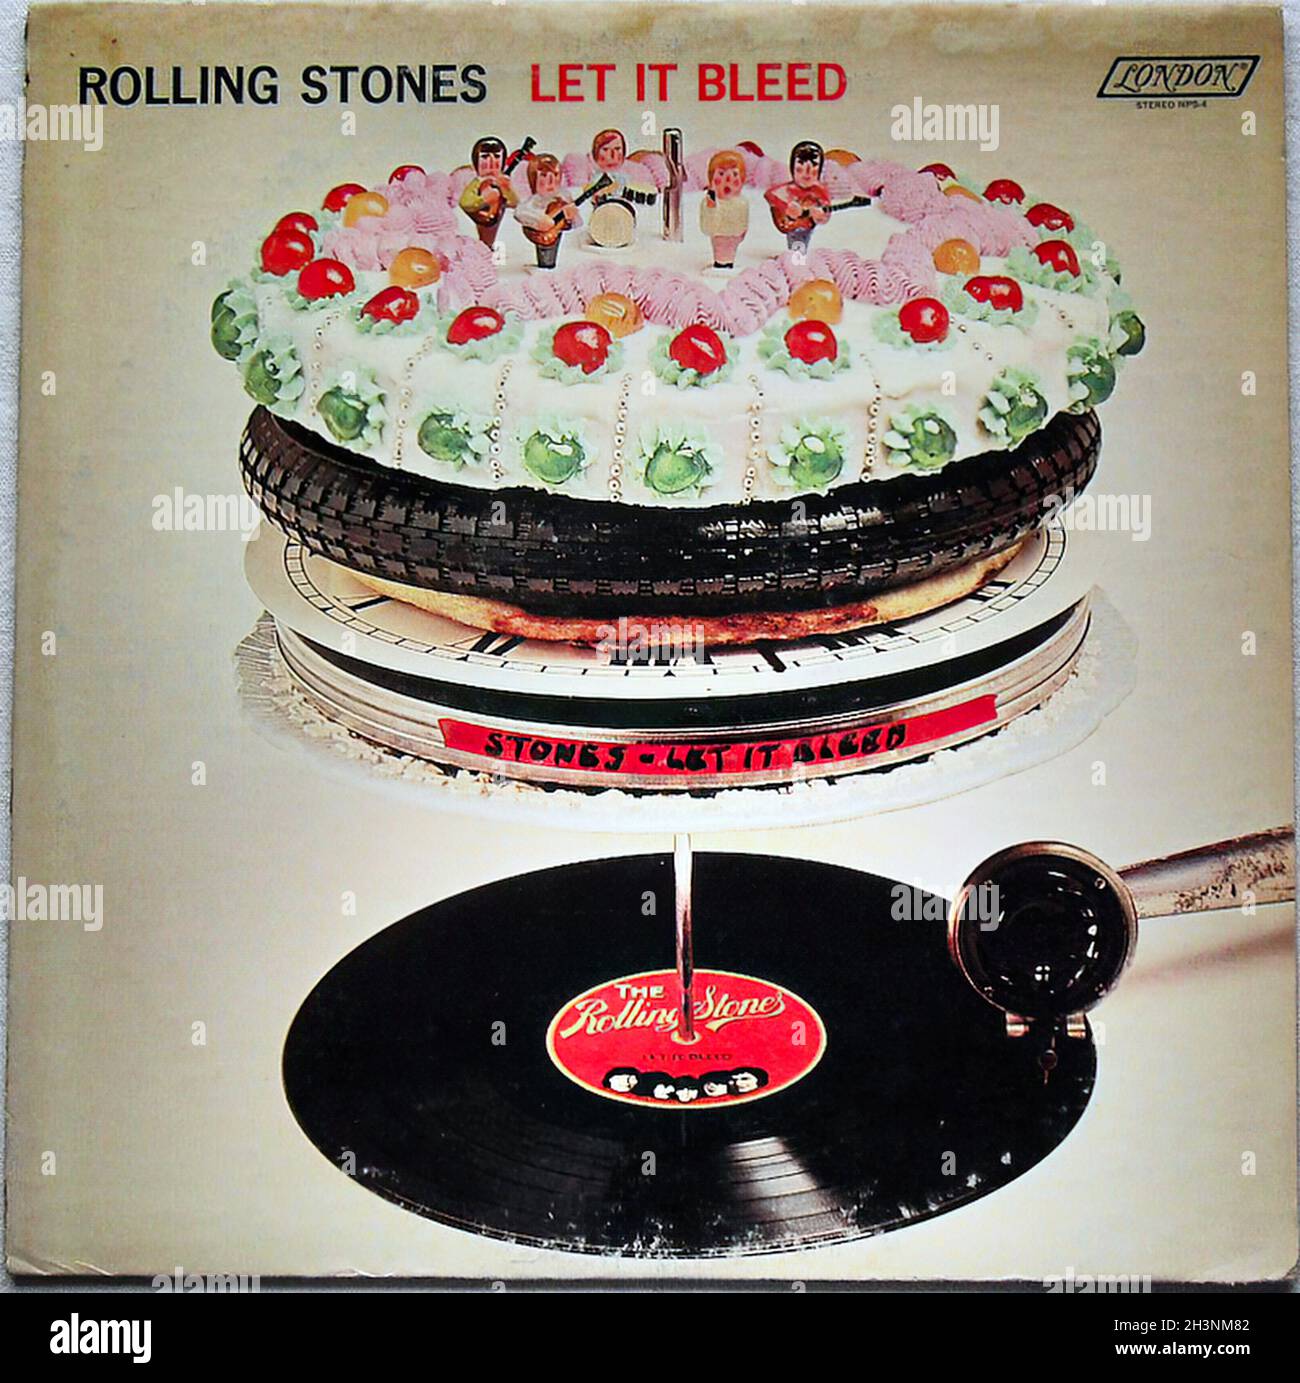 1969 Rolling Stones Let It Bleed Lp Vinyl Original Vintage Record Album  Sleeve Cover 1960s A Stock Photo - Alamy